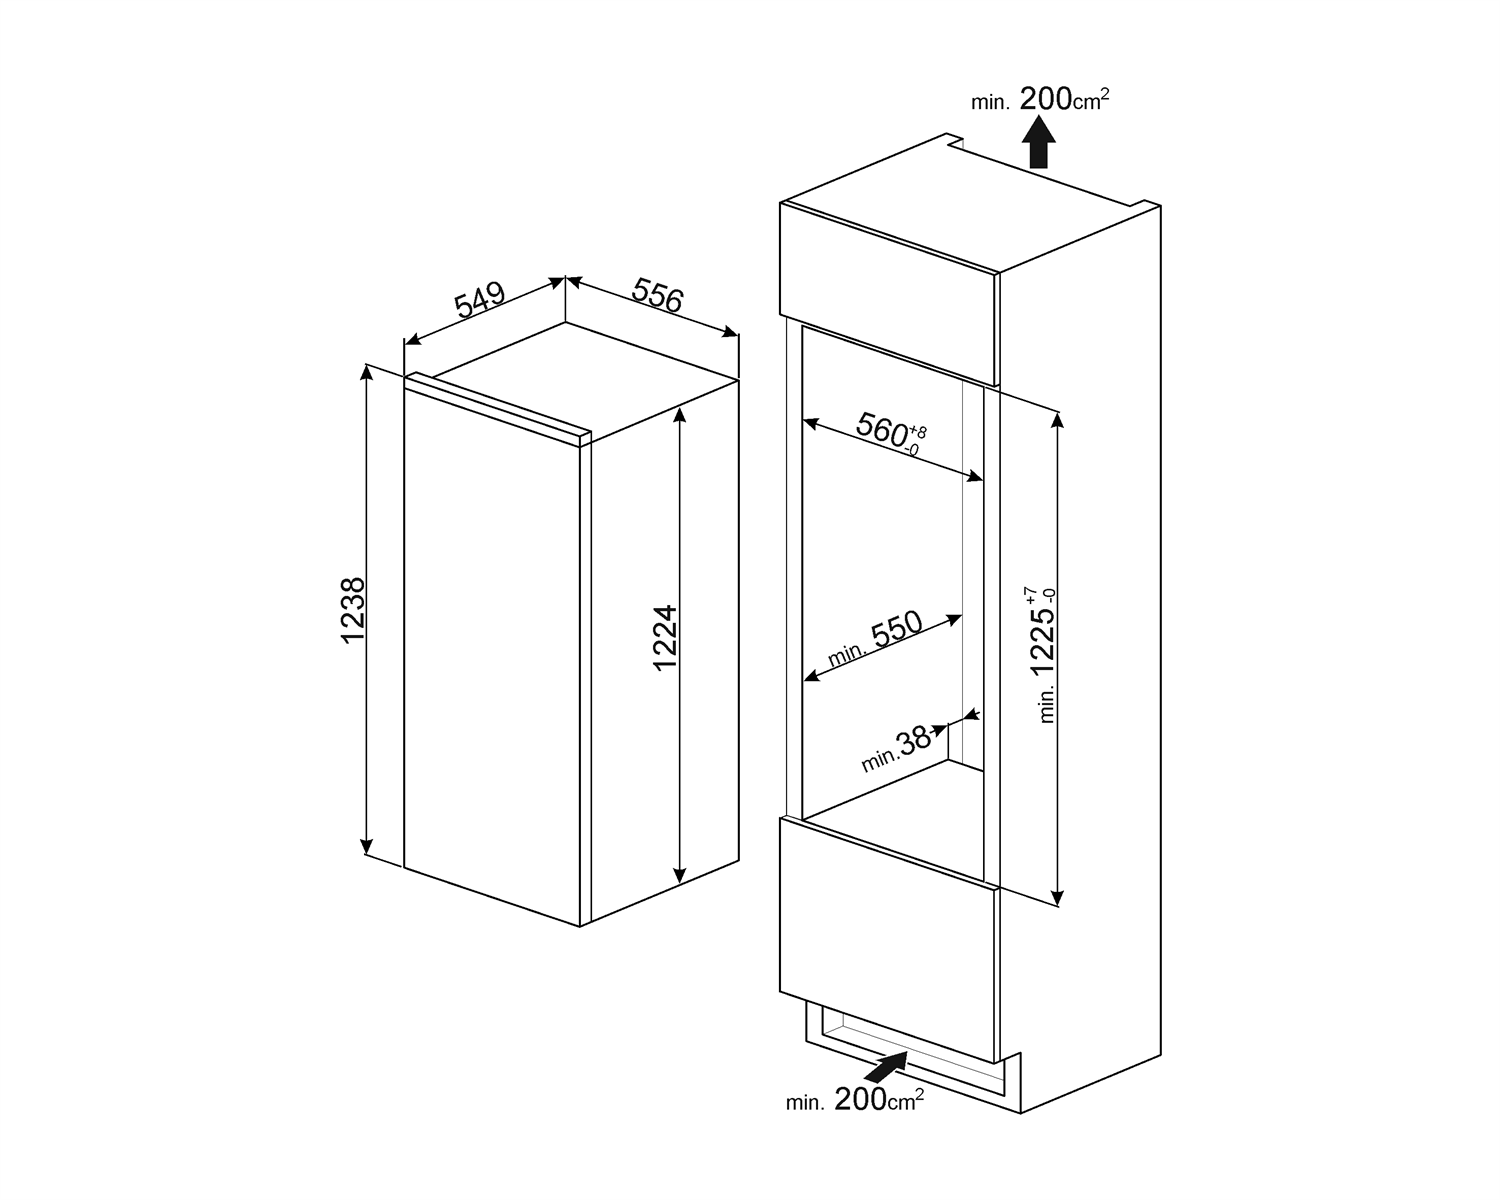 Maattekening SMEG koelkast inbouw SD7205SLD2P1